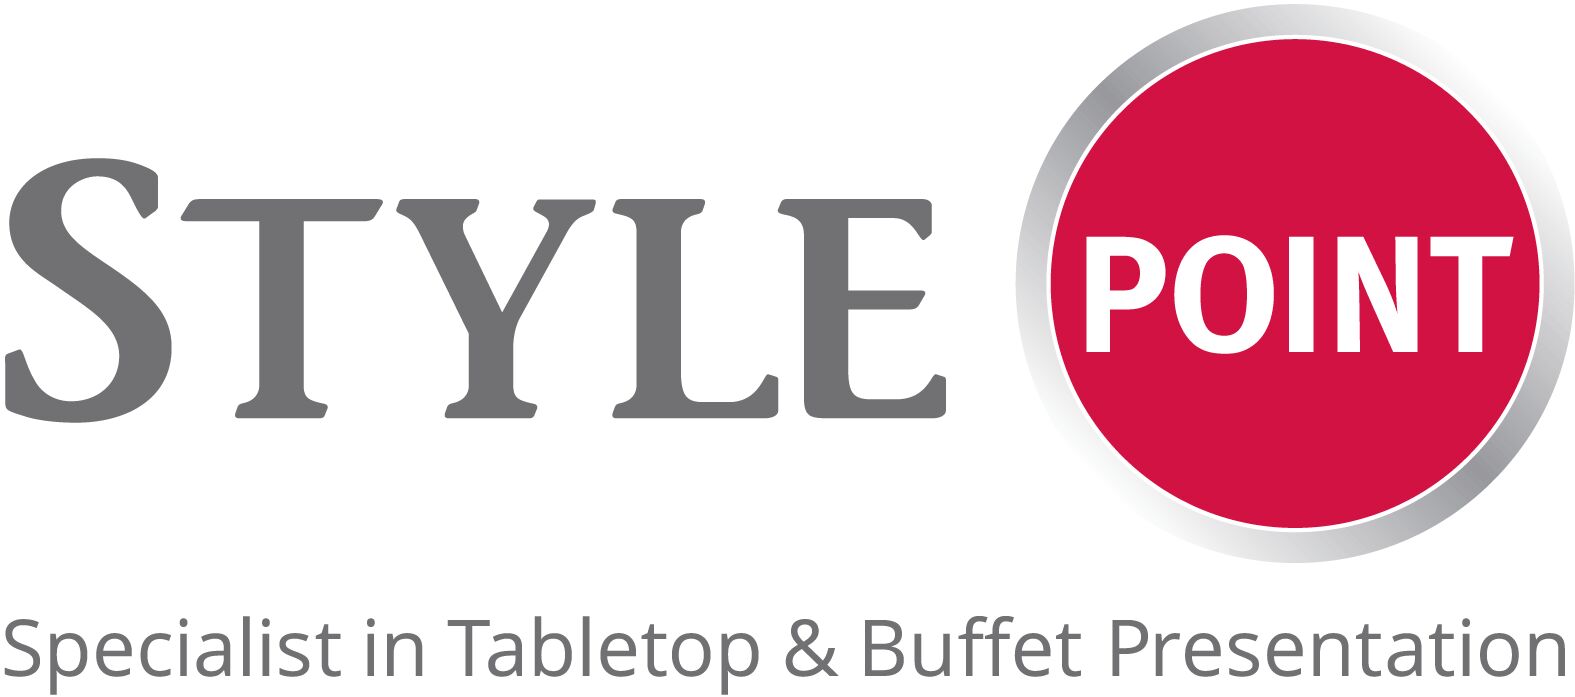 stylepoint-logo-2016